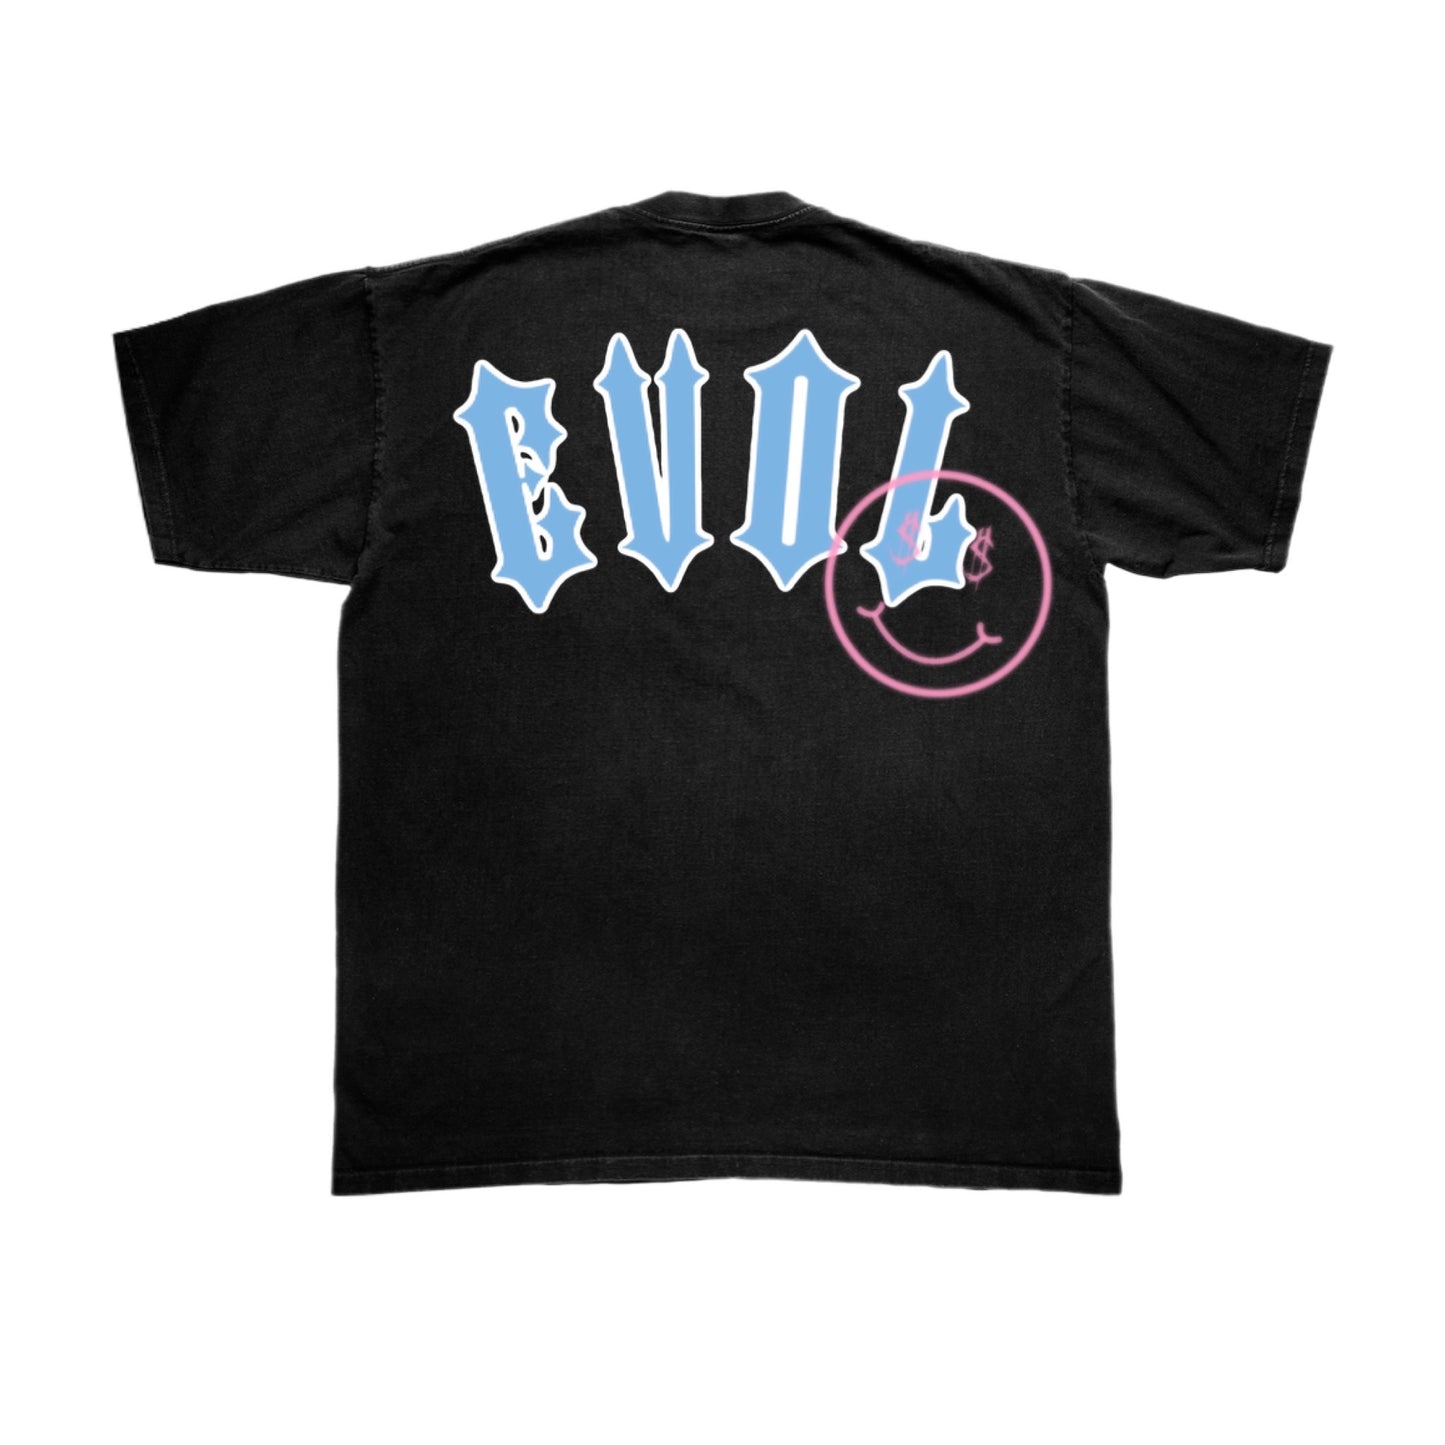 EVOL F*ck Love Shirt Black and Blue